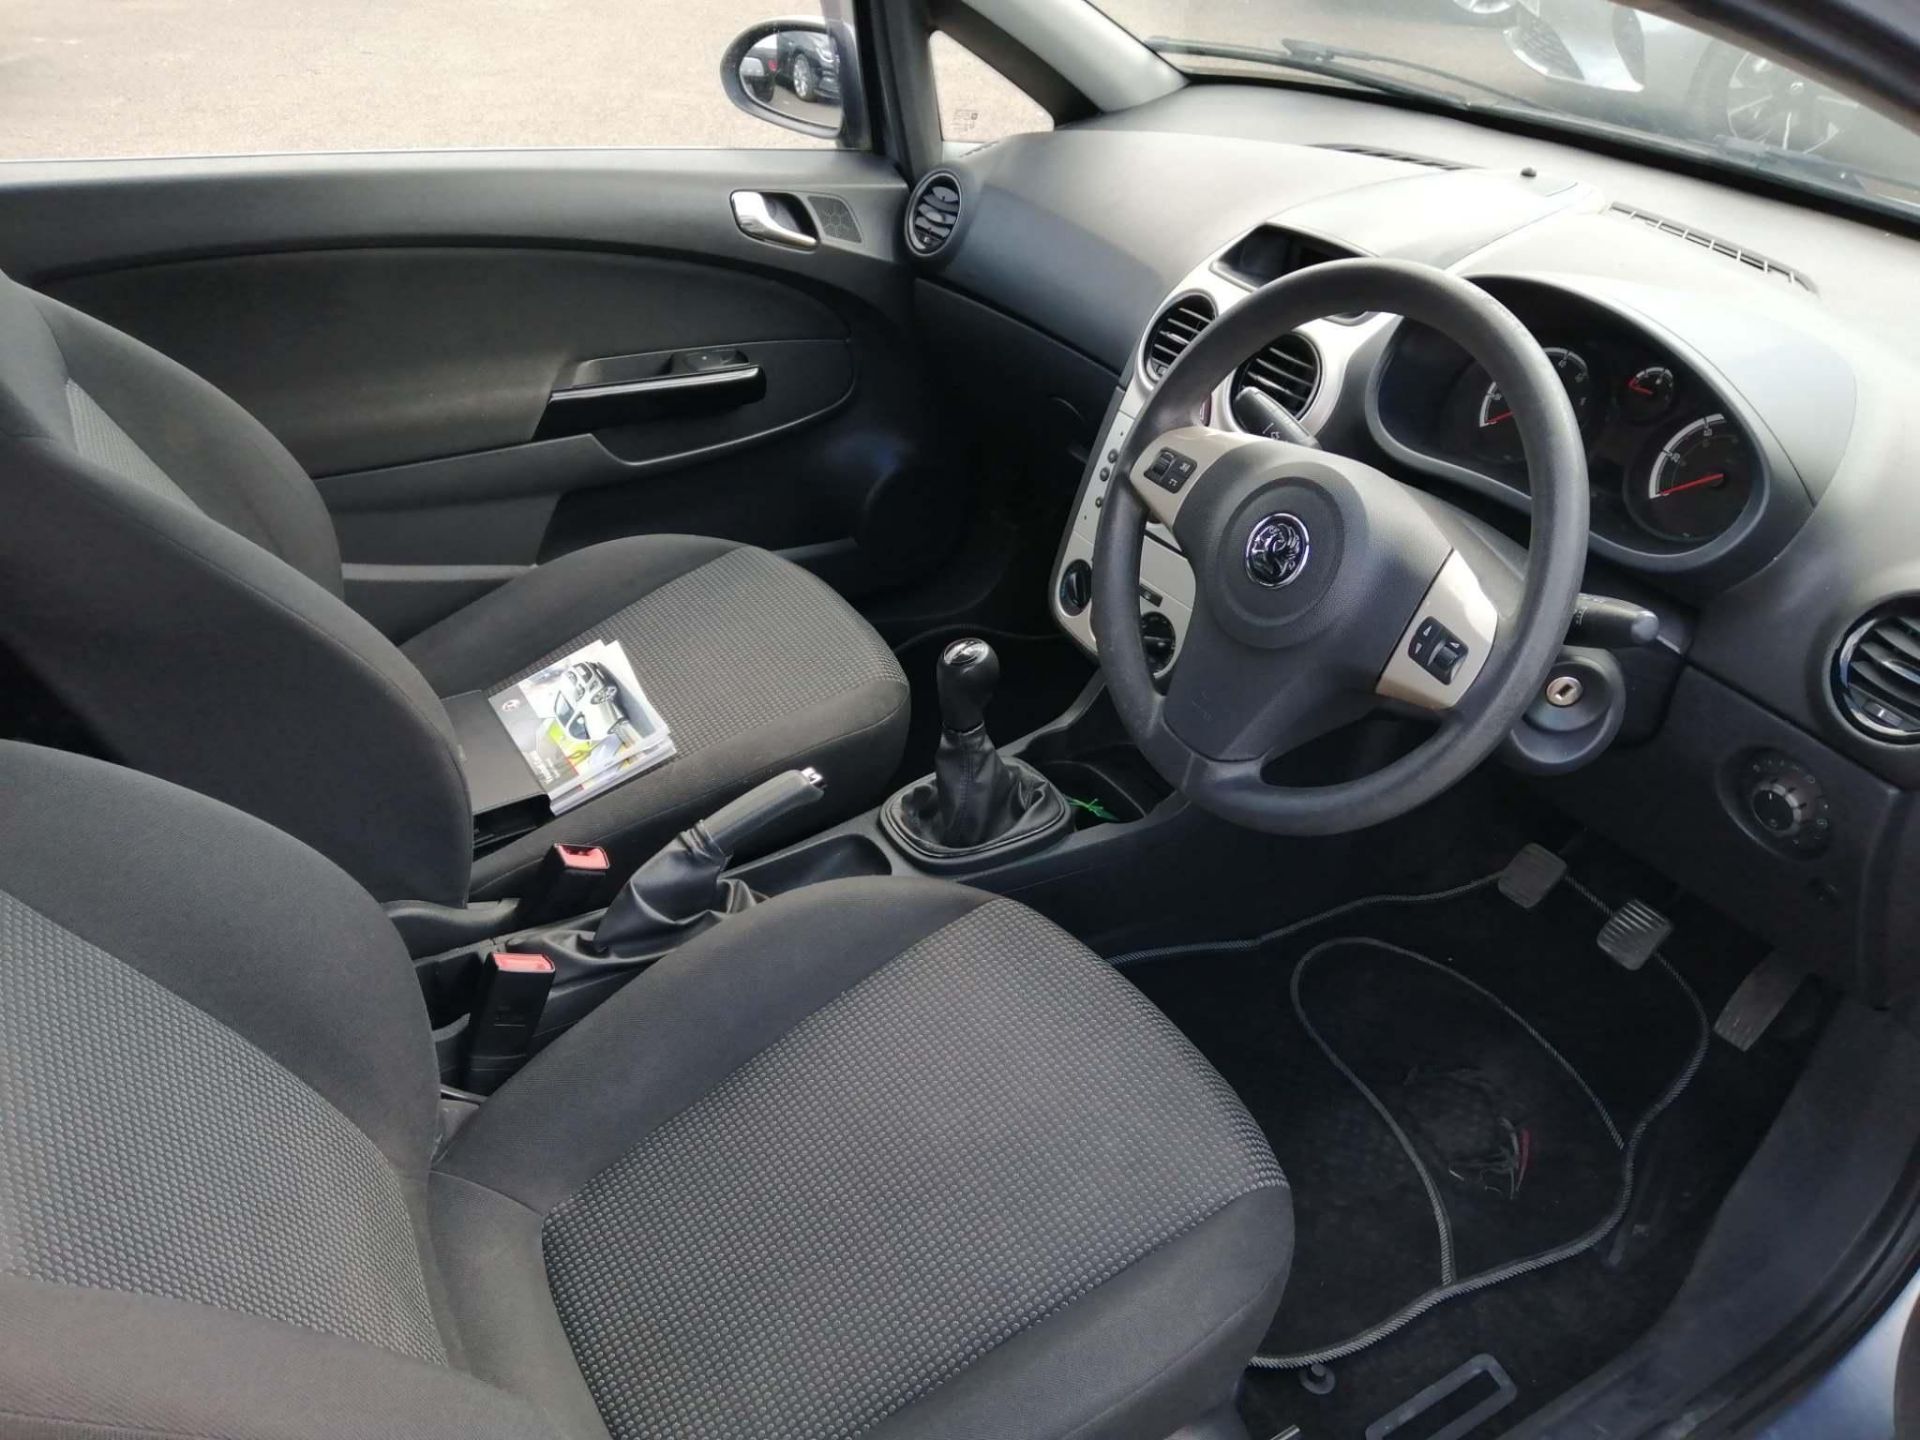 2009 Vauxhaull Corsa Active 1.0 3Dr Hatchback - Image 5 of 13